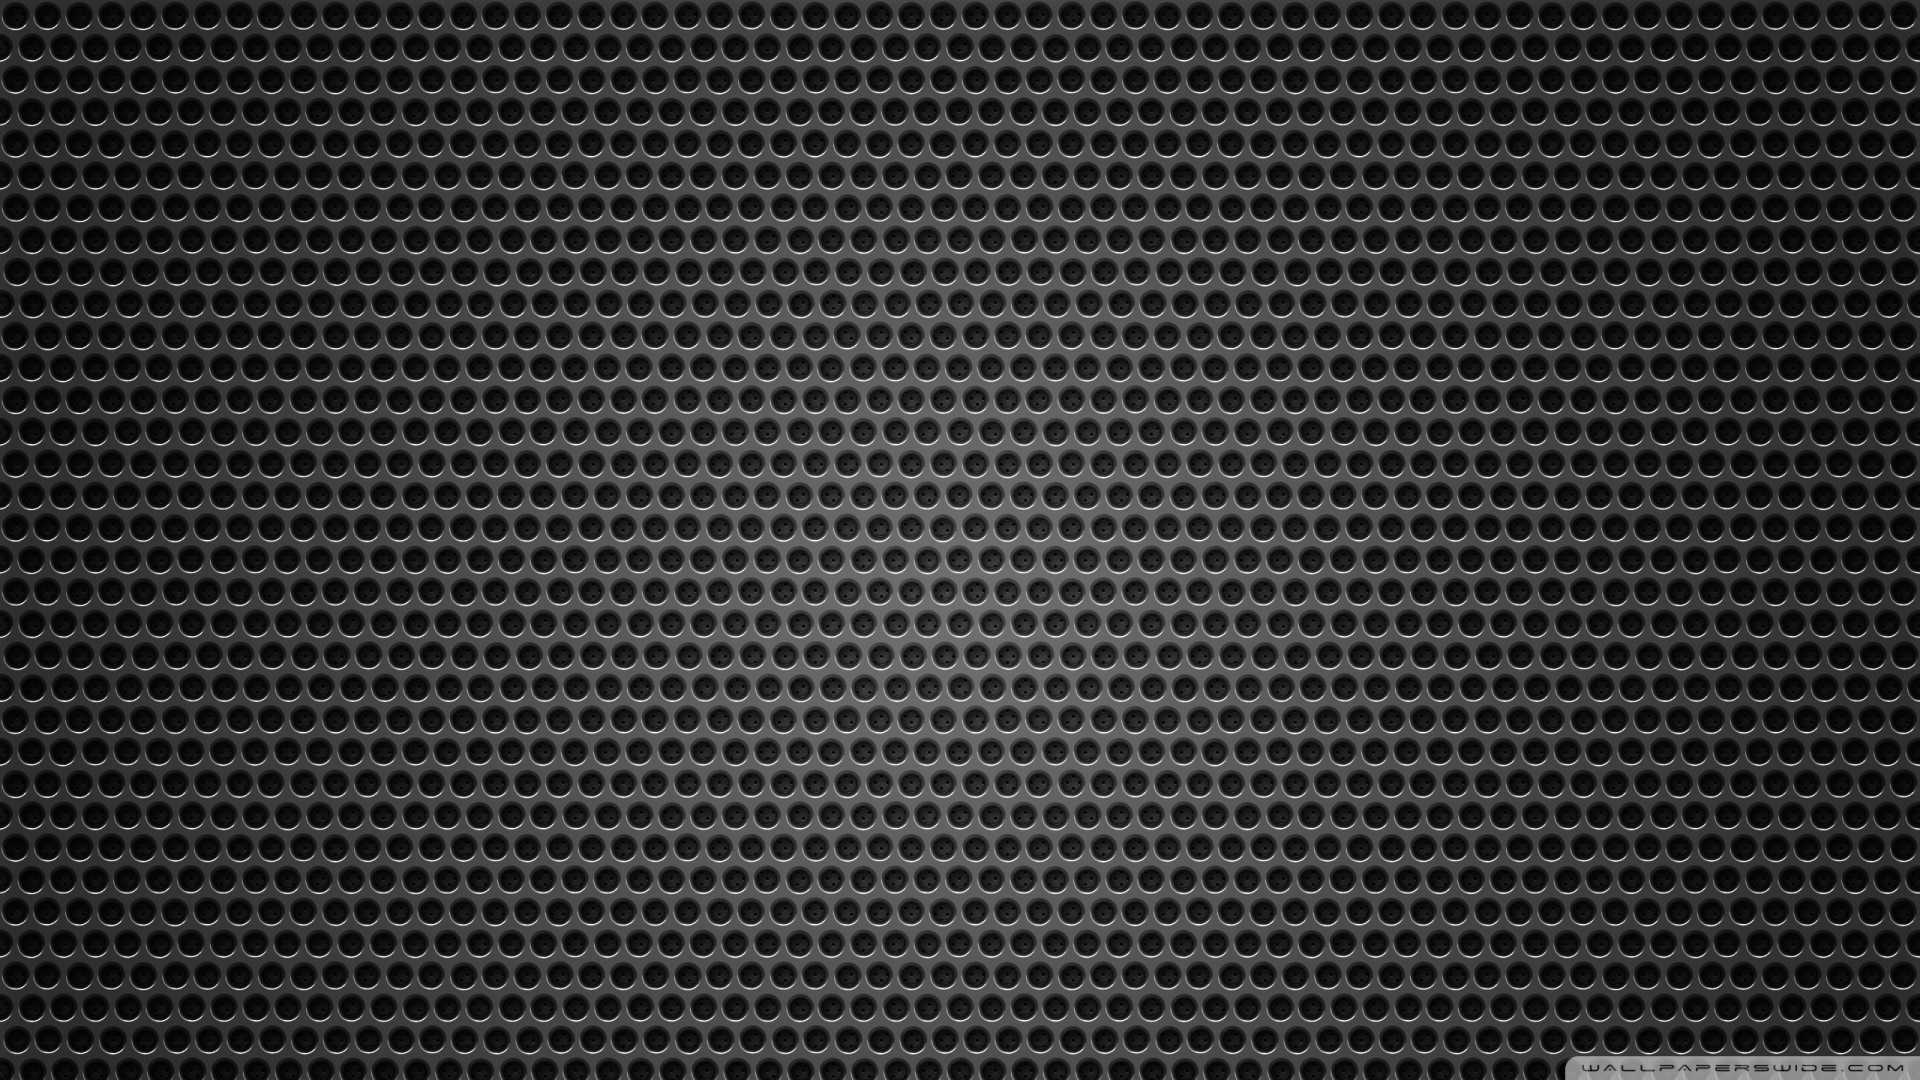 Background Metal Hole Wallpaper Black